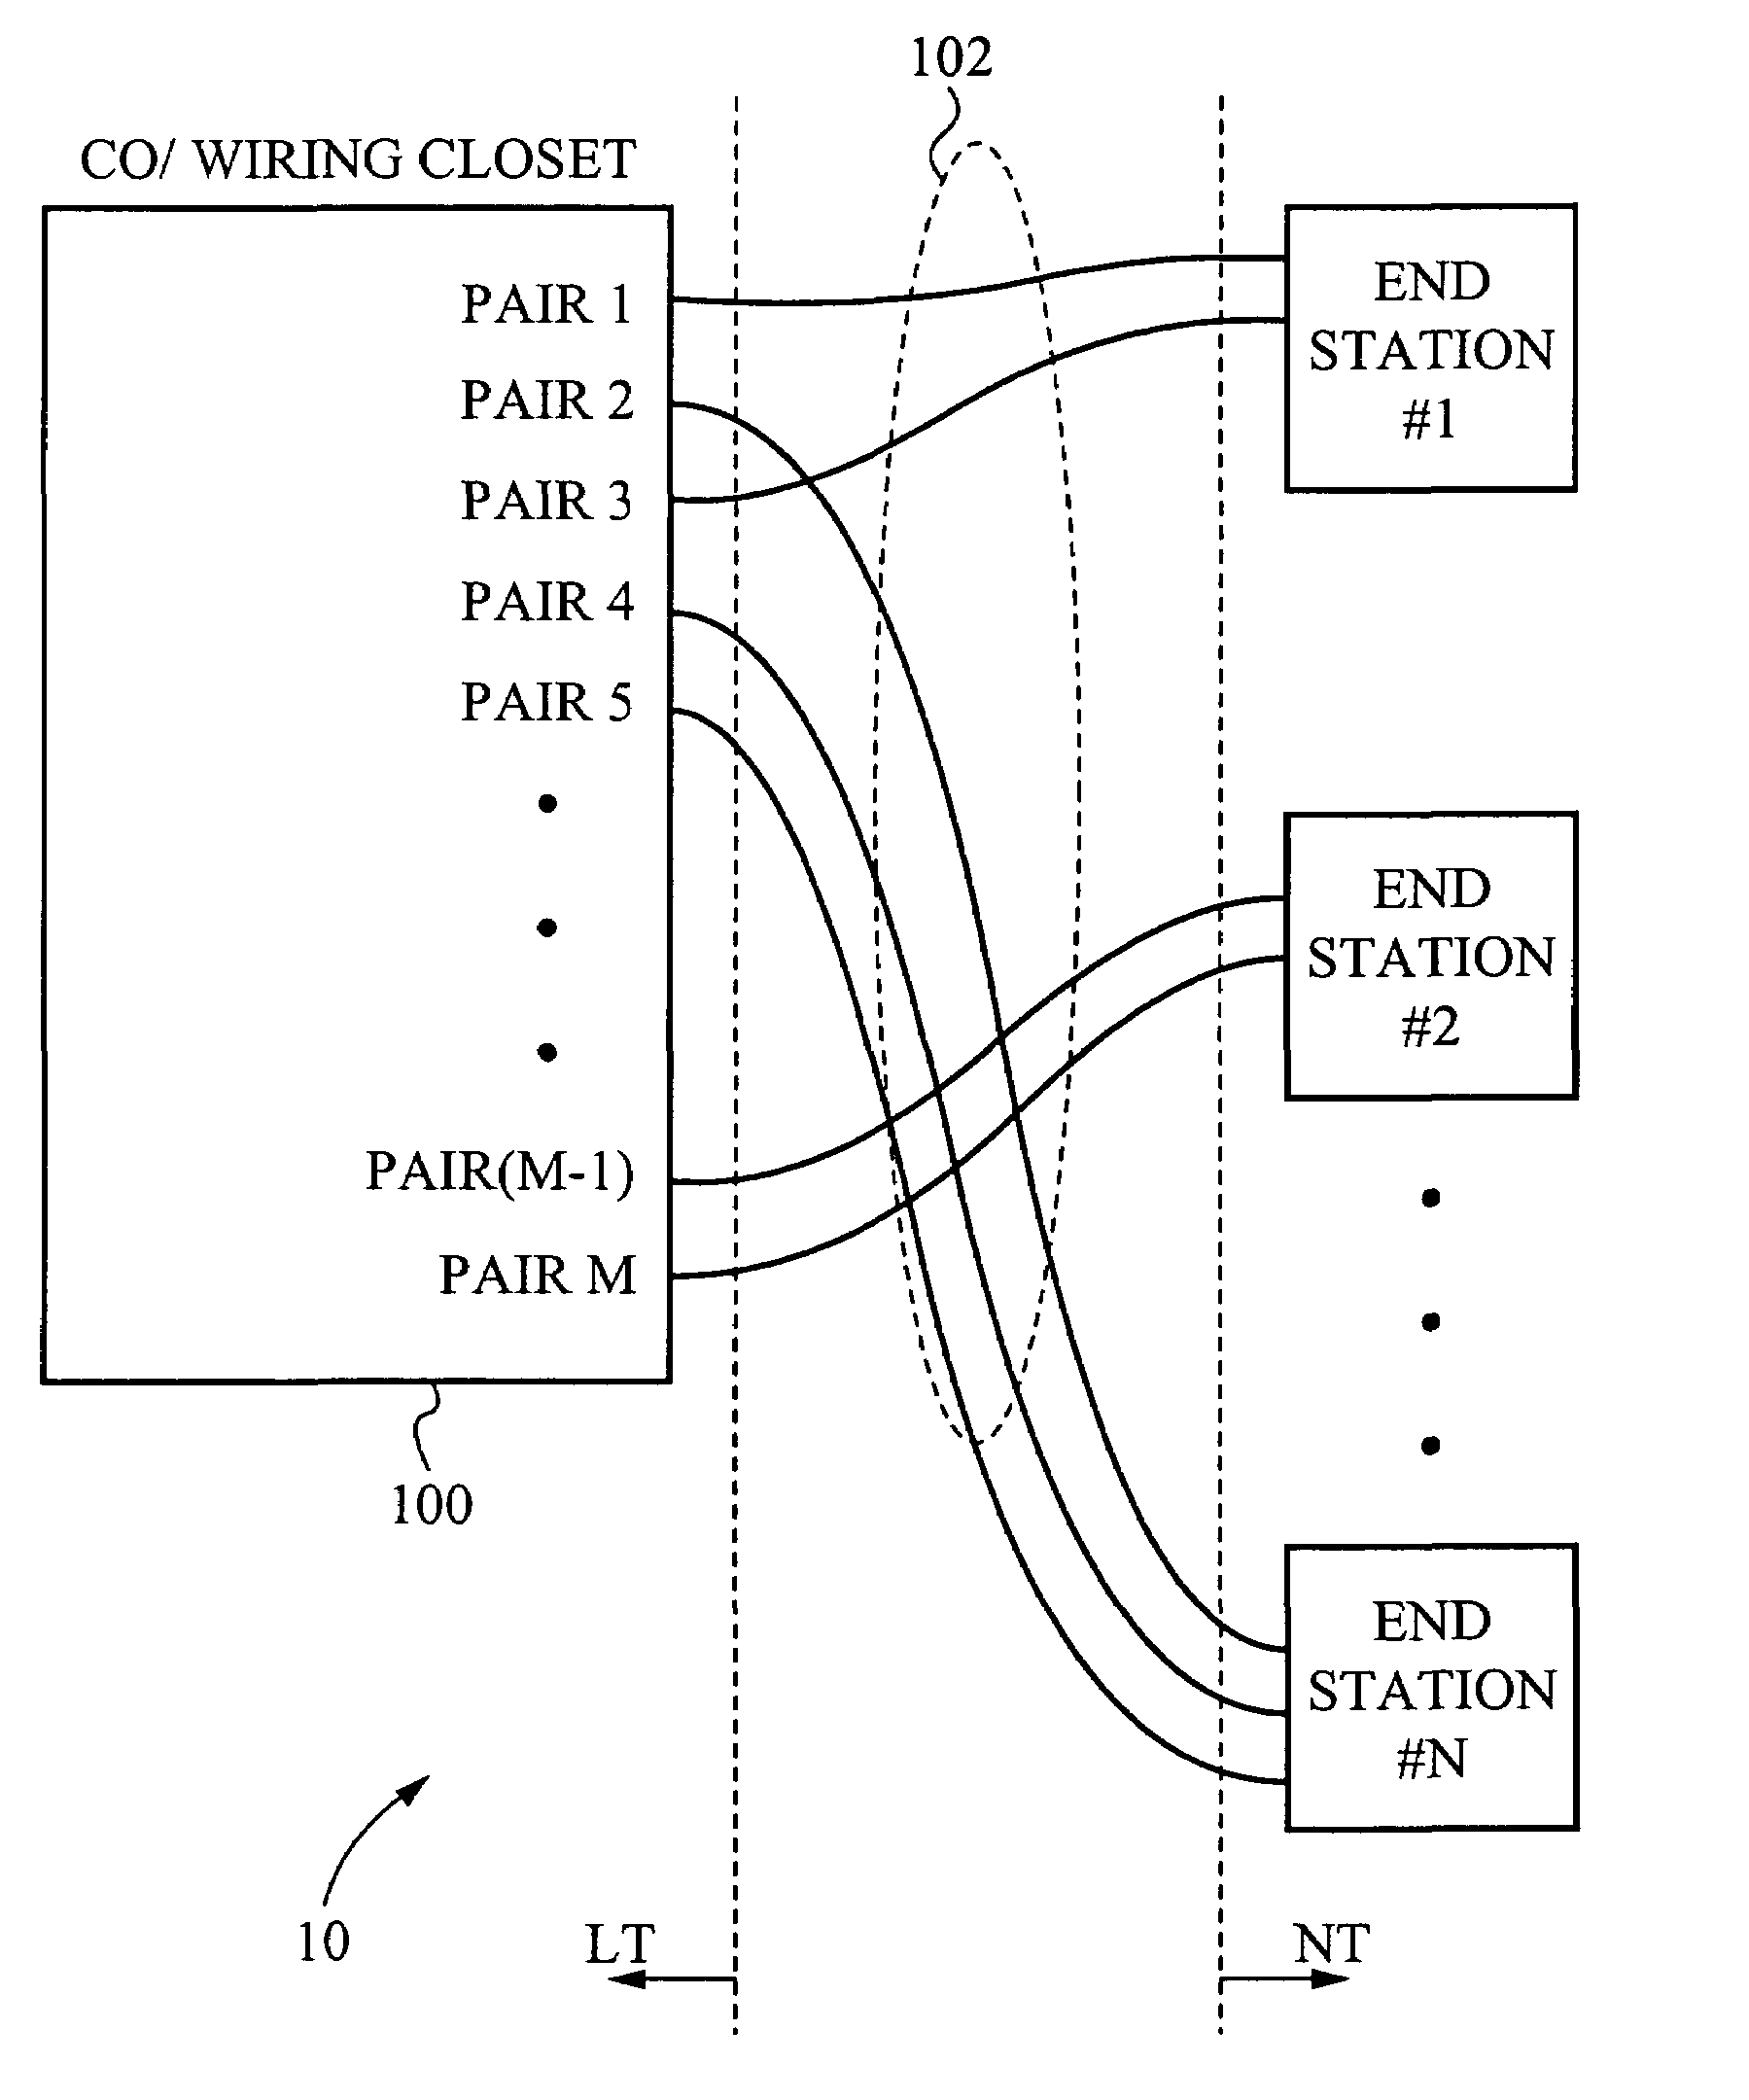 Multi-pair aggregate power distribution